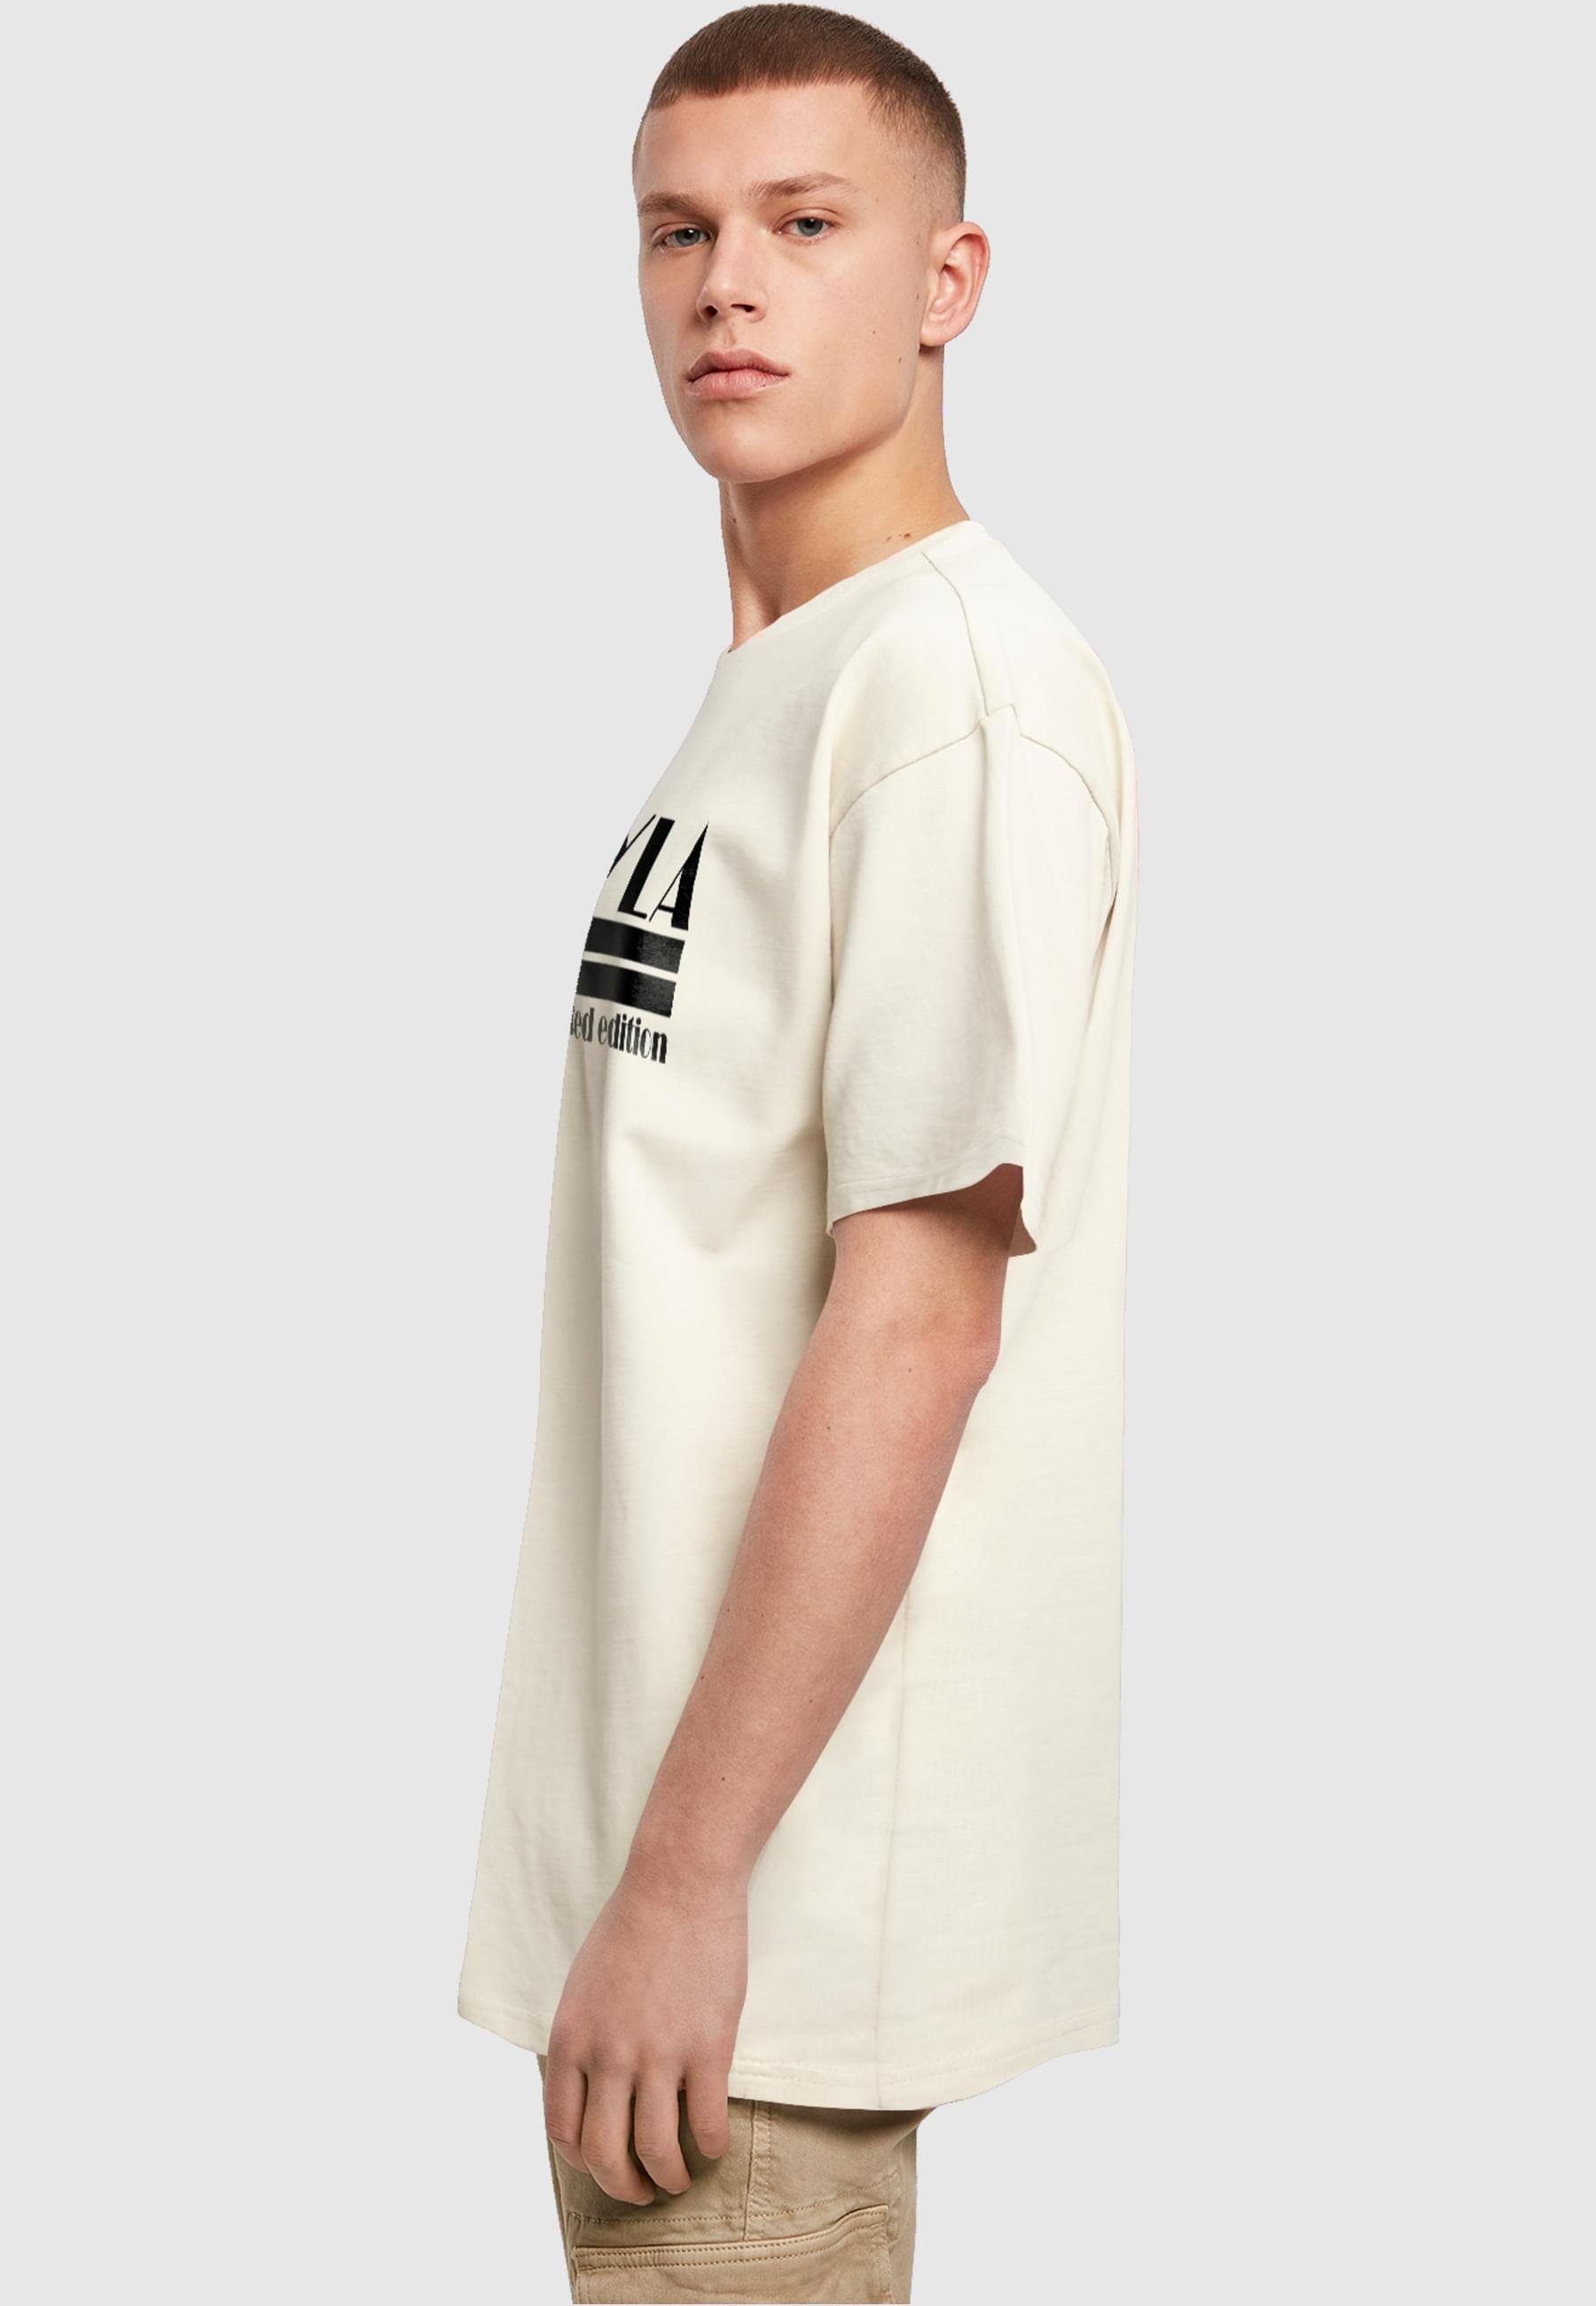 Edition Limited Oversize Merchcode Layla sand (1-tlg) T-Shirt Herren Tee -